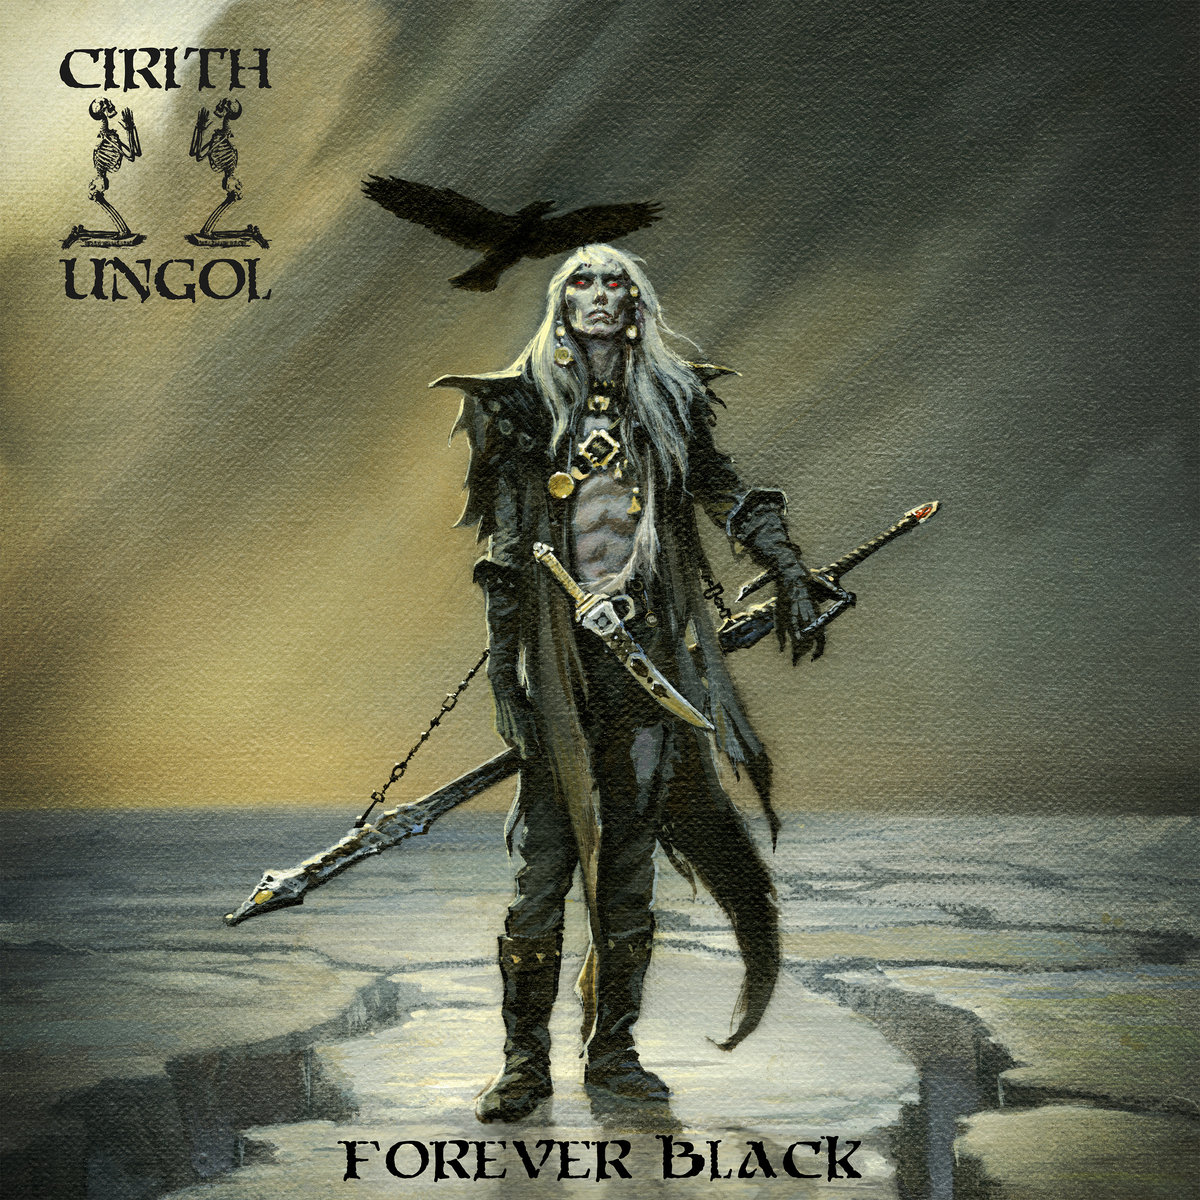 Cirith Ungol - "Forever Black" - 2020